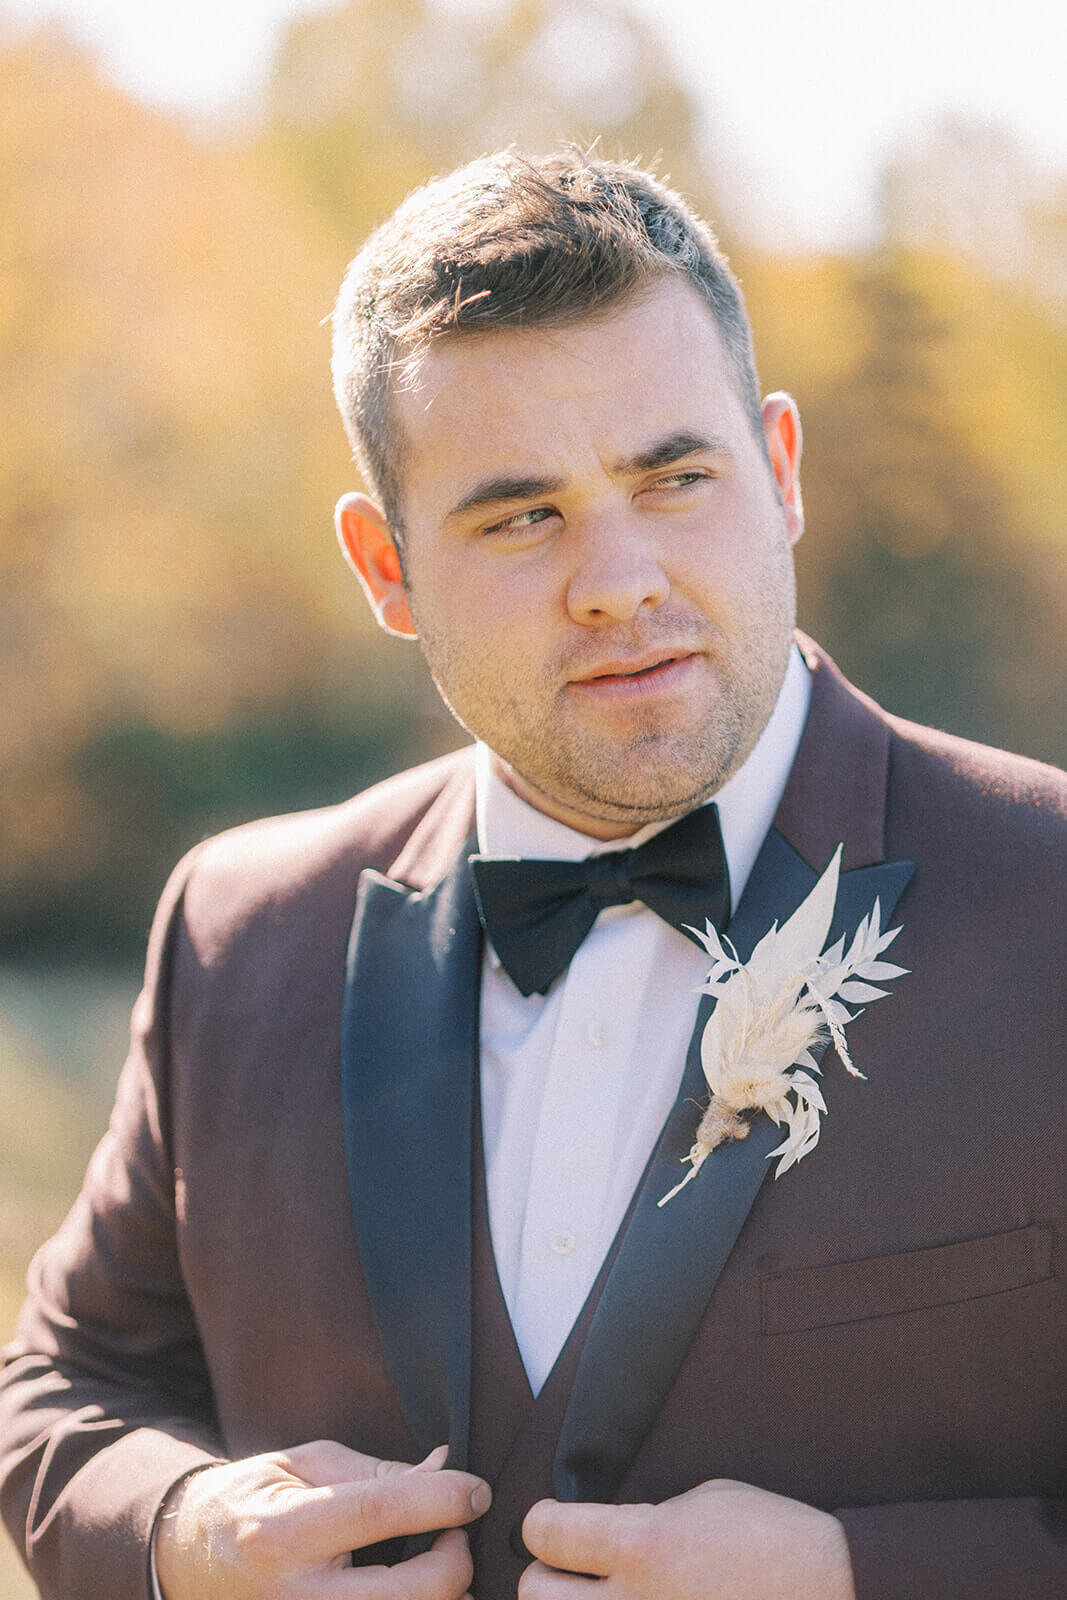 Alyssa-Marie-Photography-wedding-day-portrait-groom